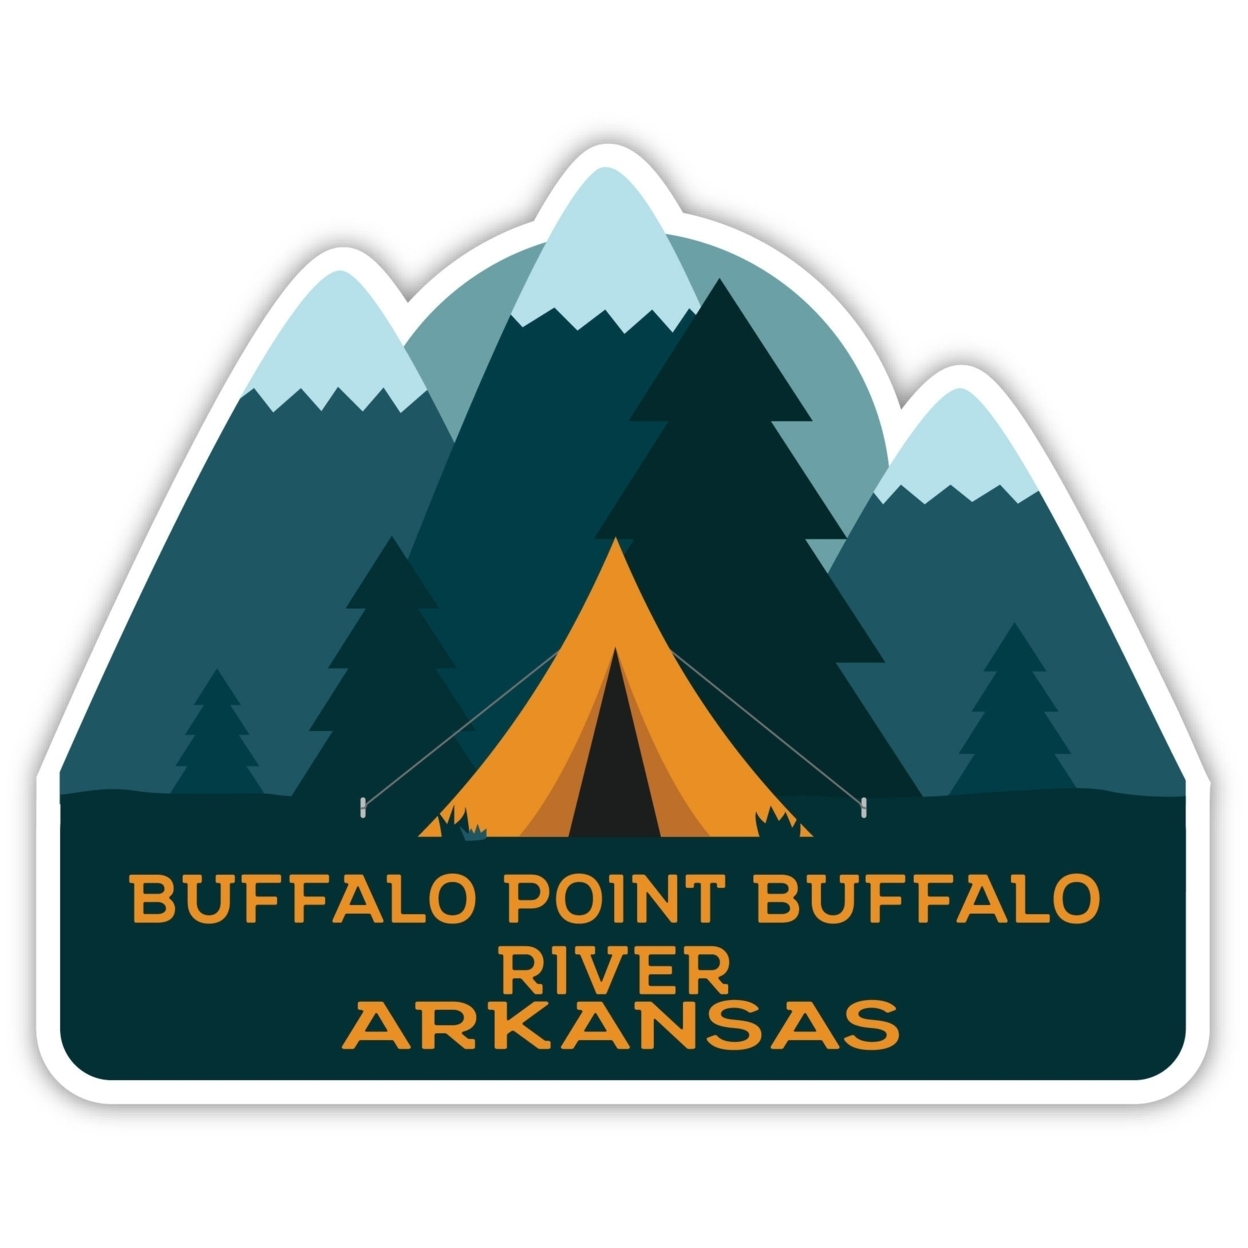 Buffalo Point Buffalo River Arkansas Souvenir Decorative Stickers (Choose Theme And Size) - Single Unit, 10-Inch, Tent